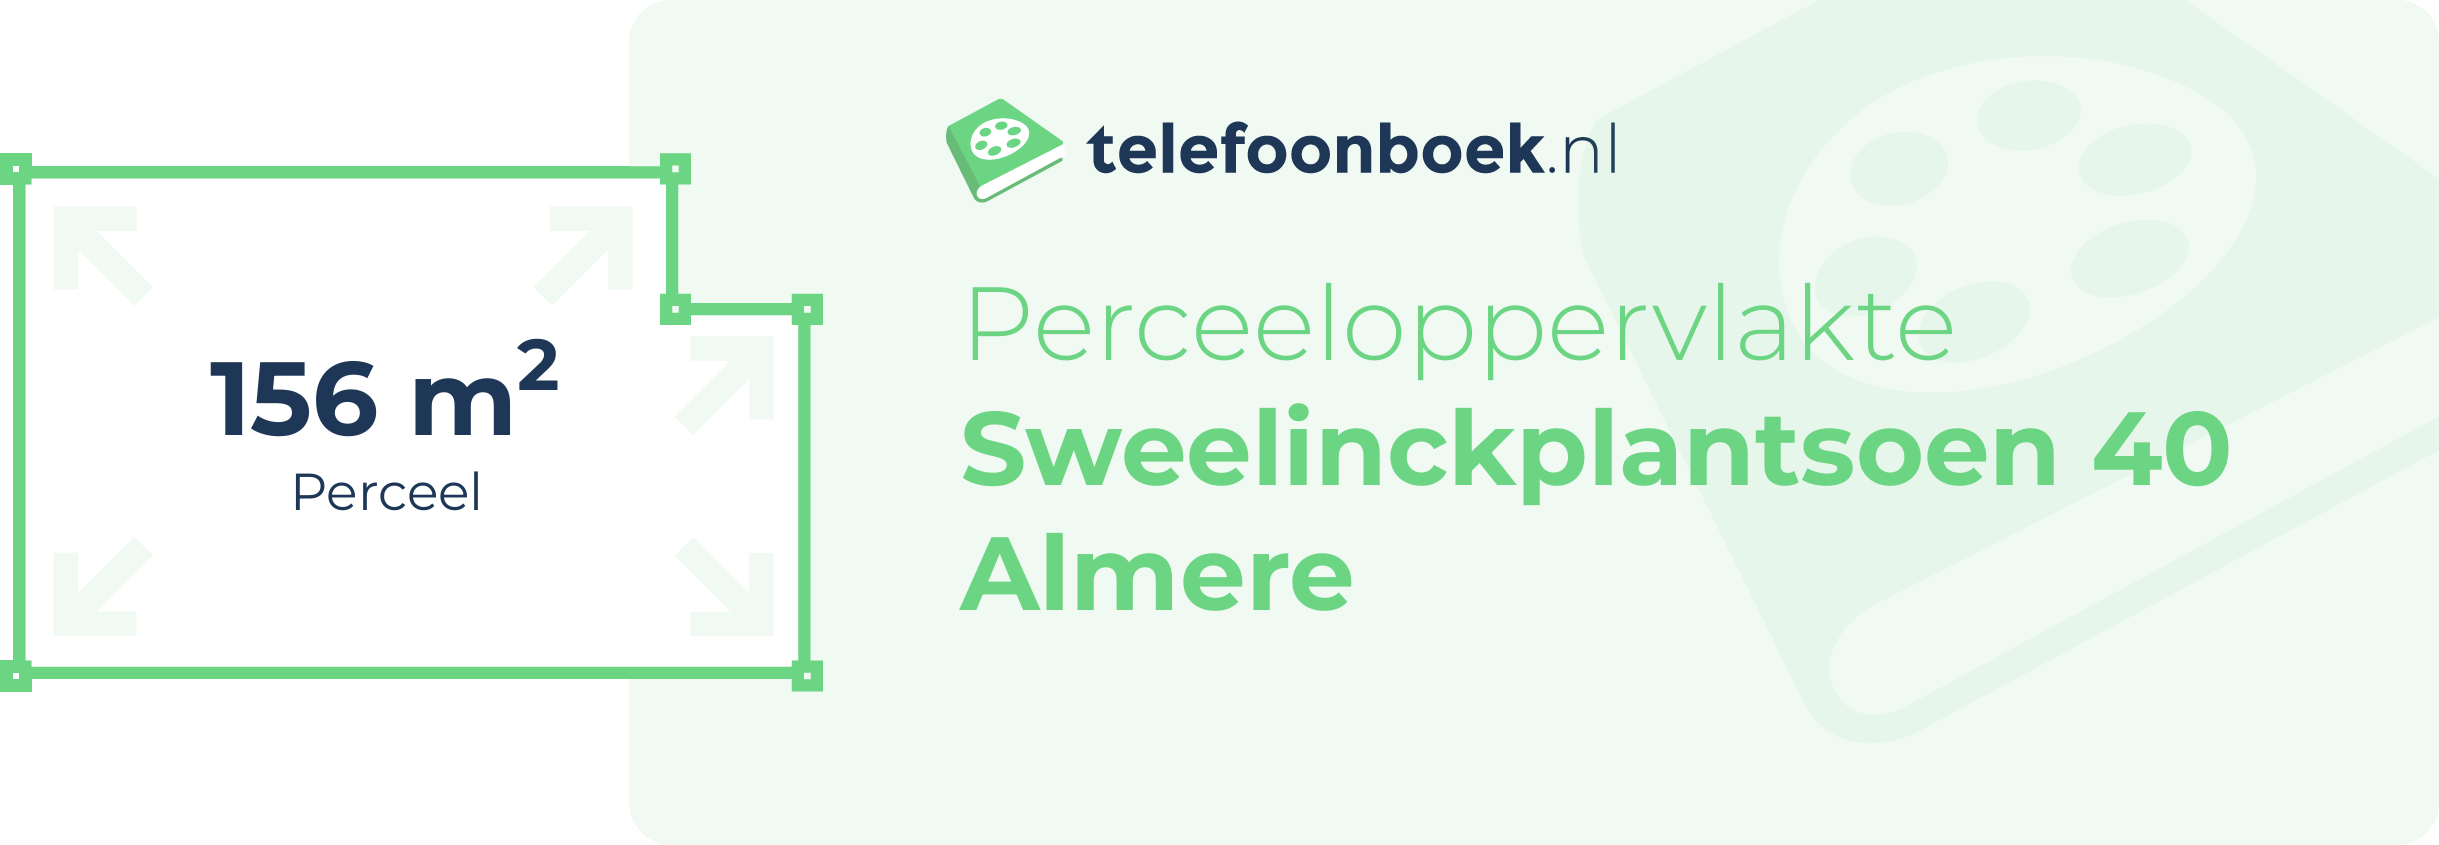 Perceeloppervlakte Sweelinckplantsoen 40 Almere